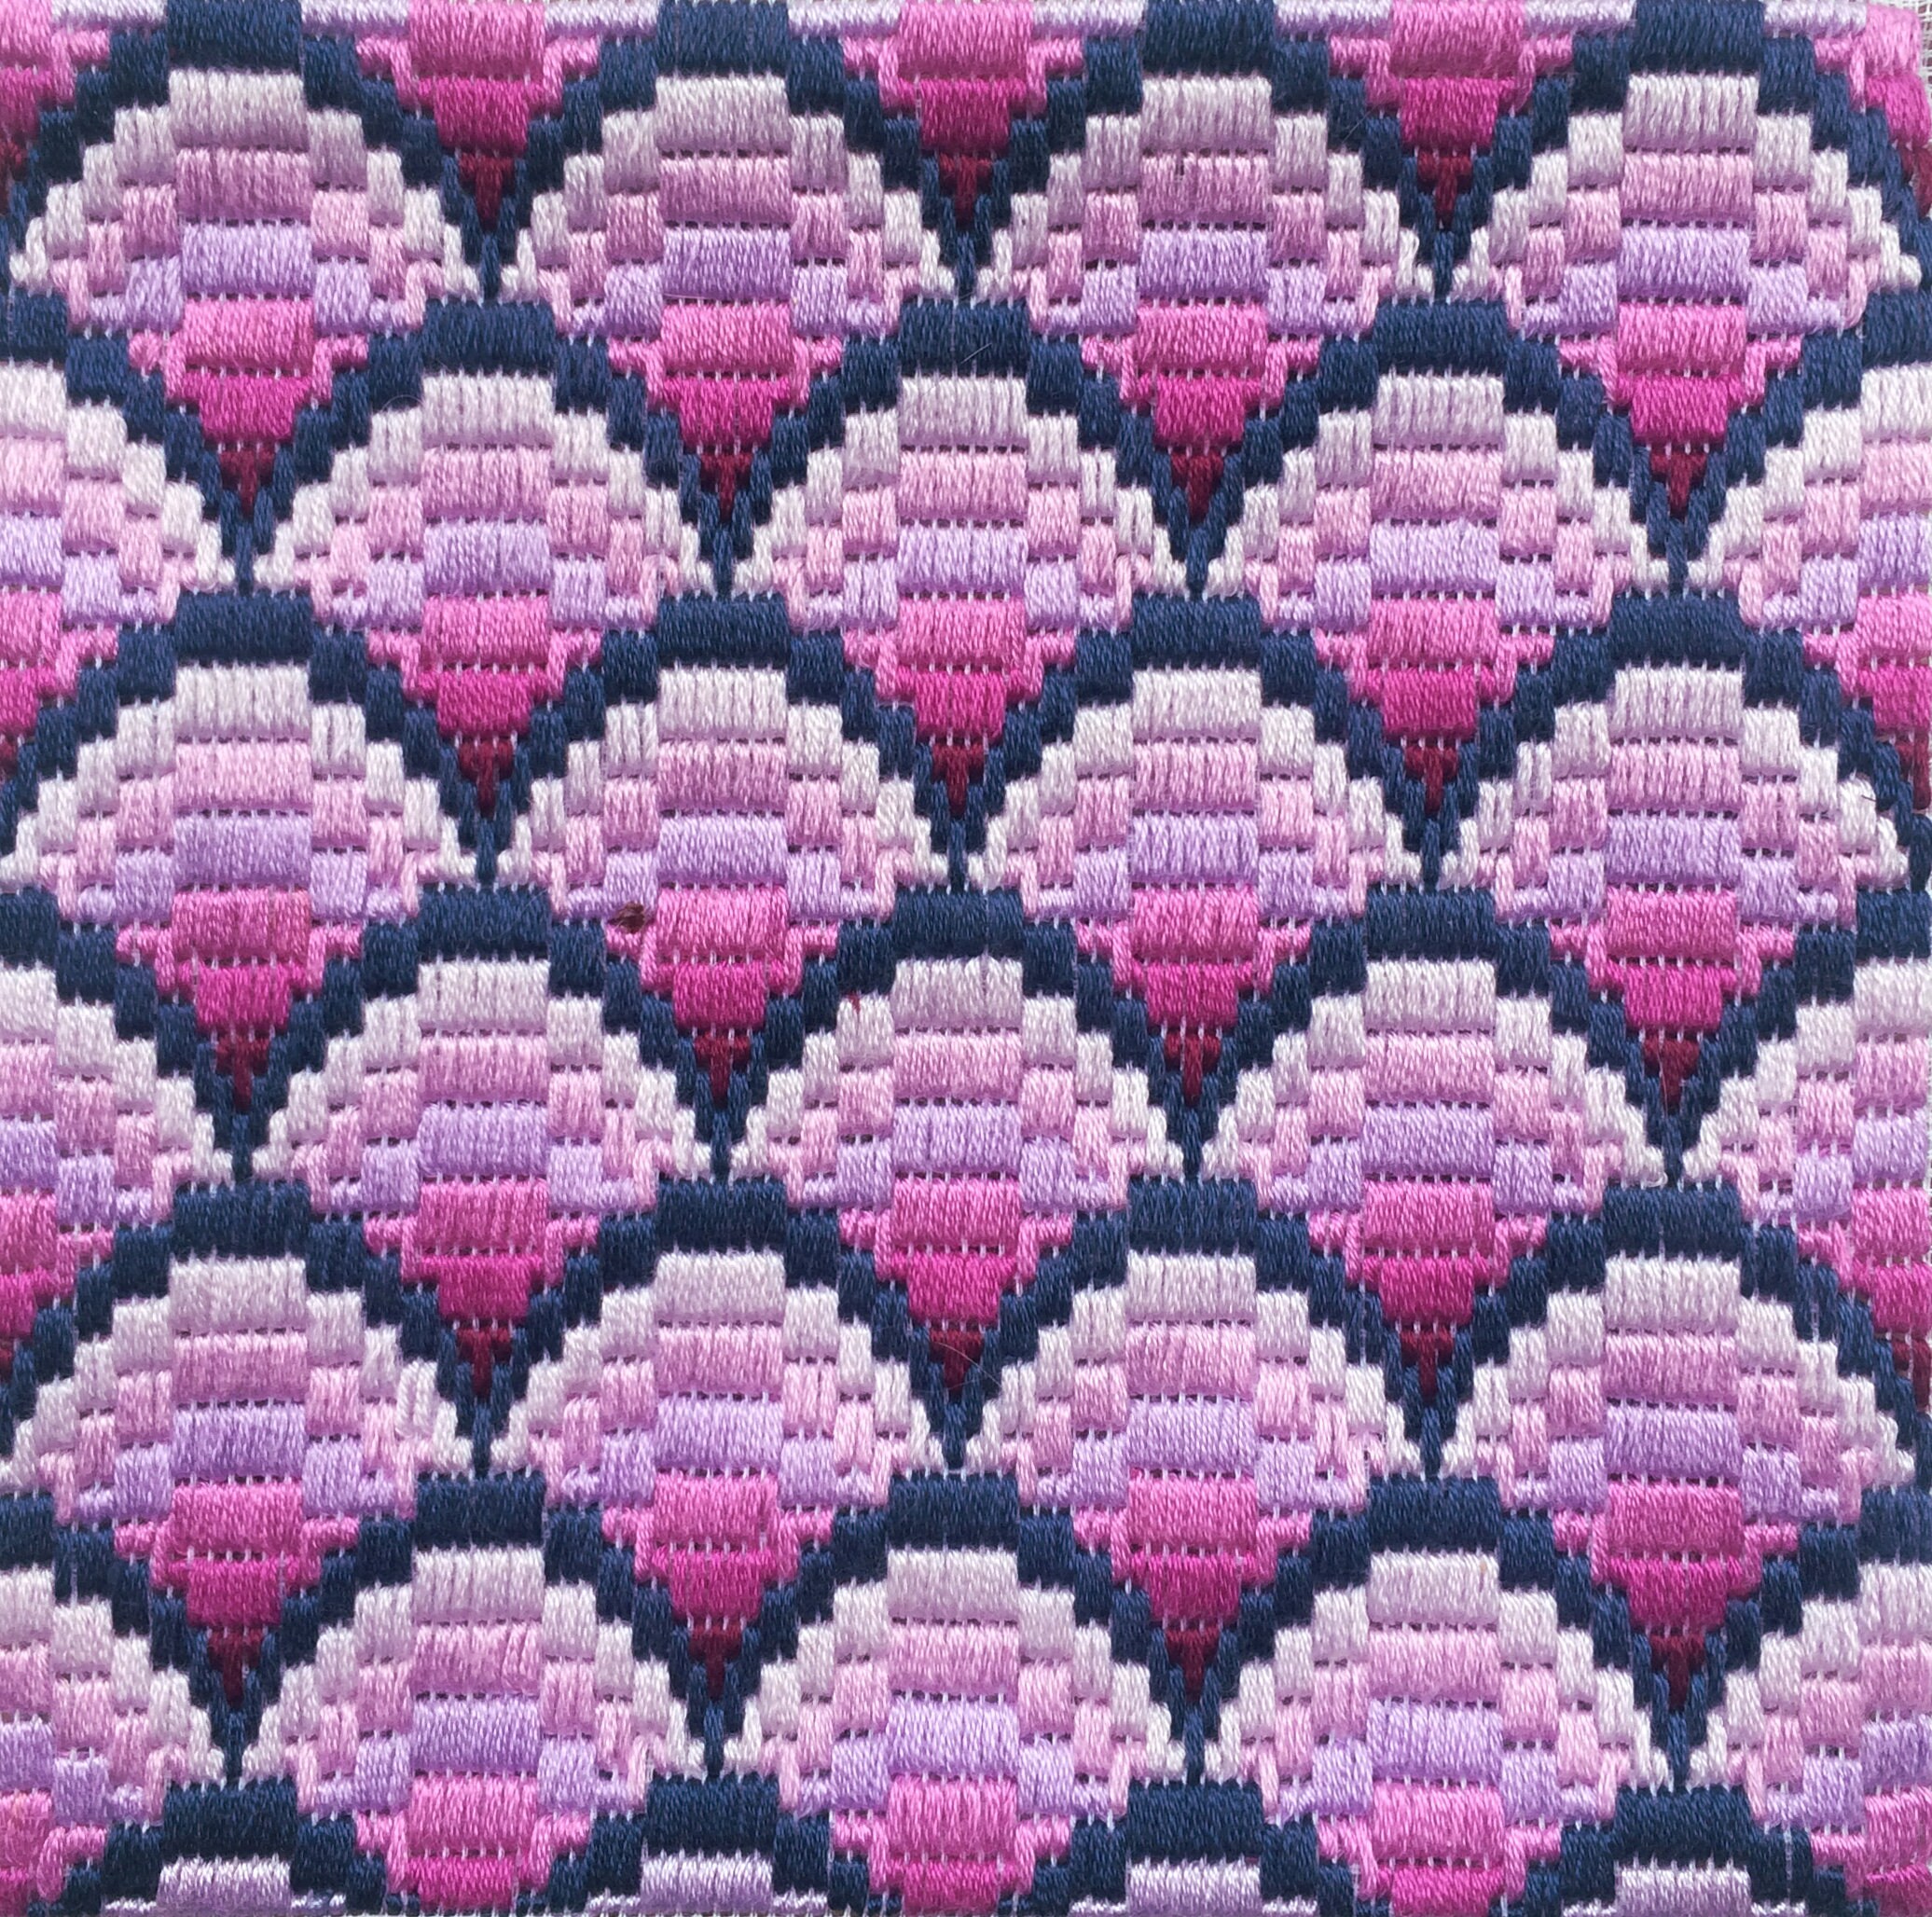 Bargello Needlepoint Kit - Making Waves Wall Hanging - Stitched Modern